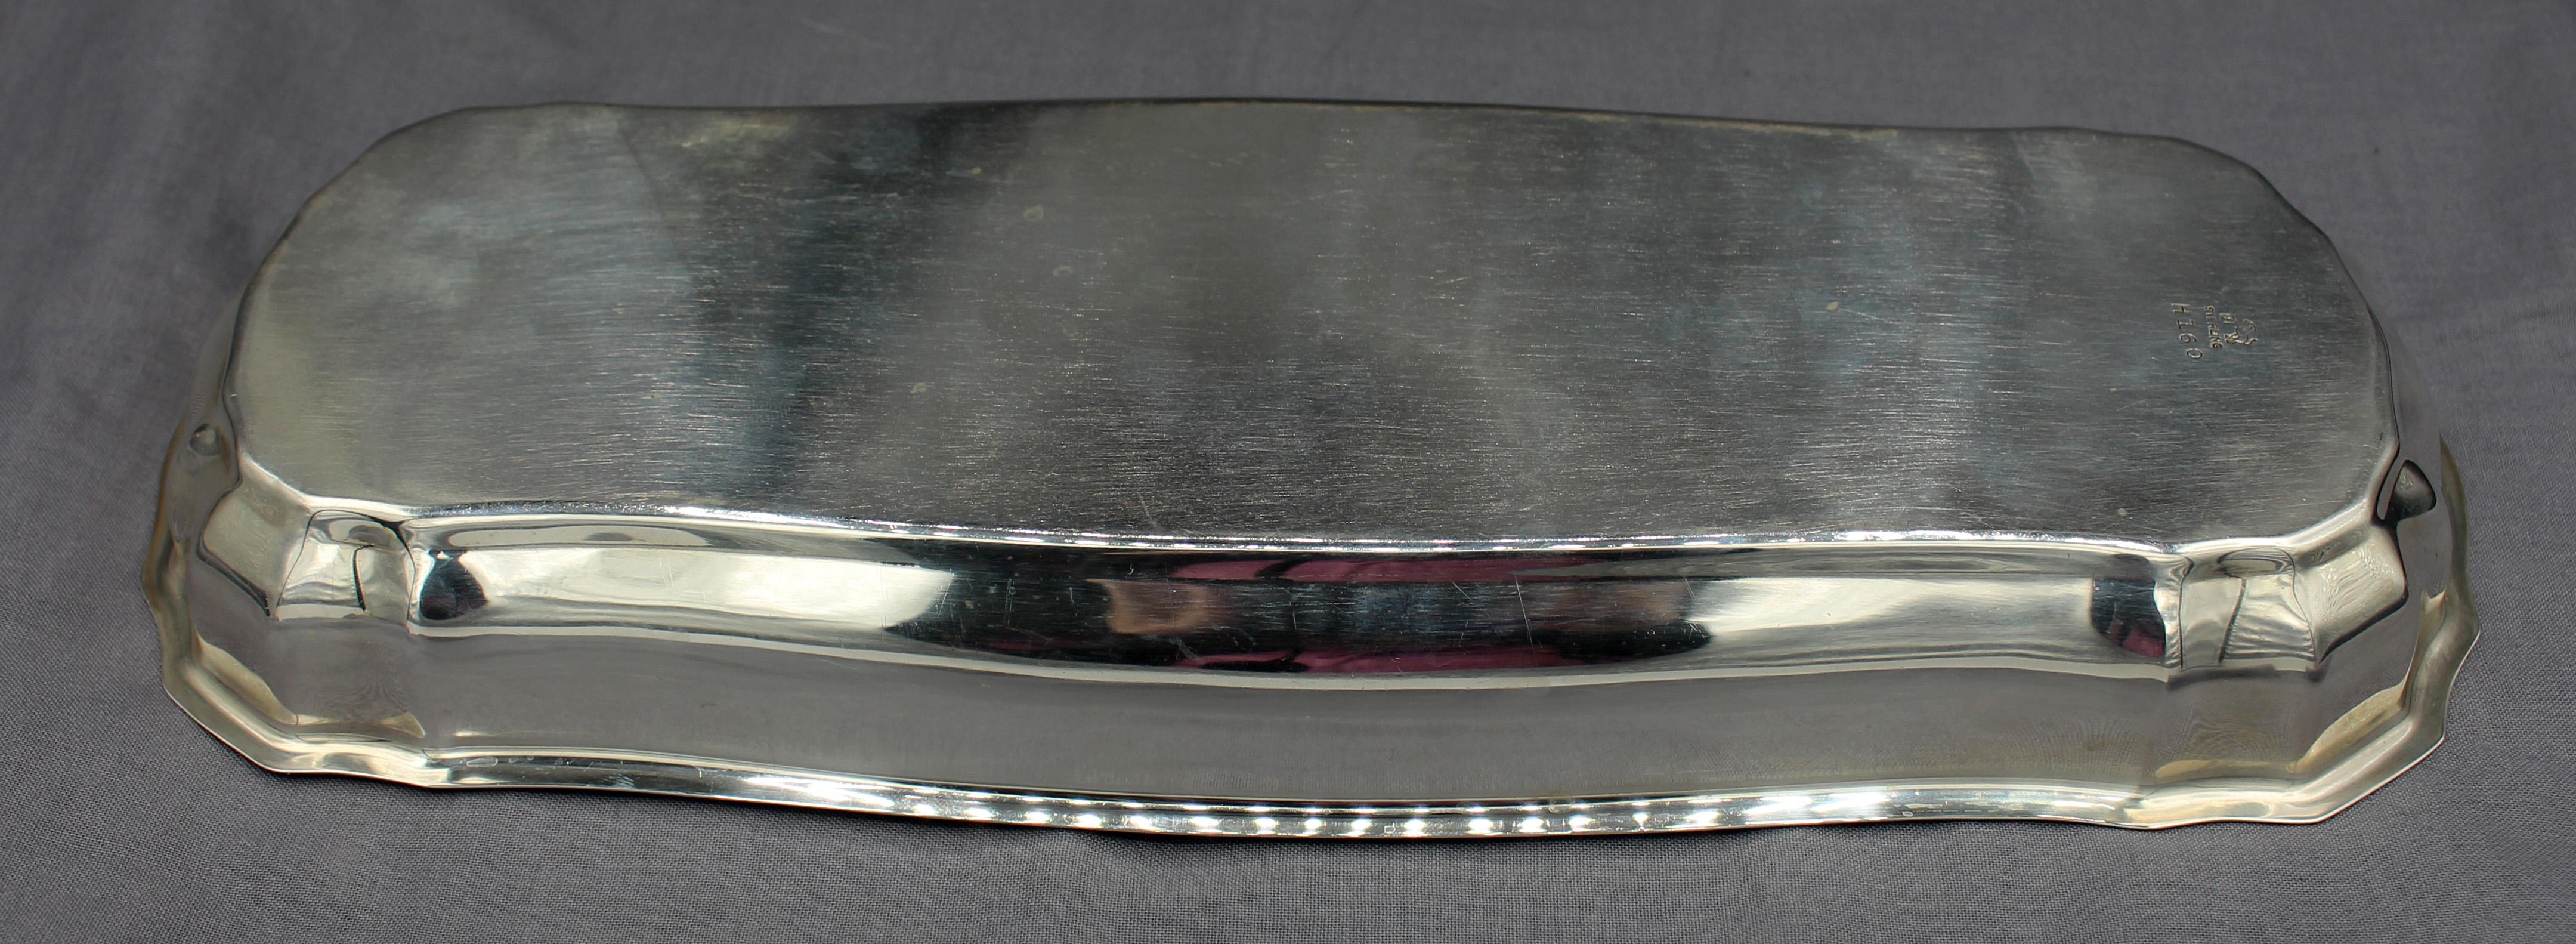 Circa 1950s sterling silver bread tray by Ellmore Silver Co. Chippendale shape. 8.85 troy oz. Estate of Linda Kornberg.
11 3/4